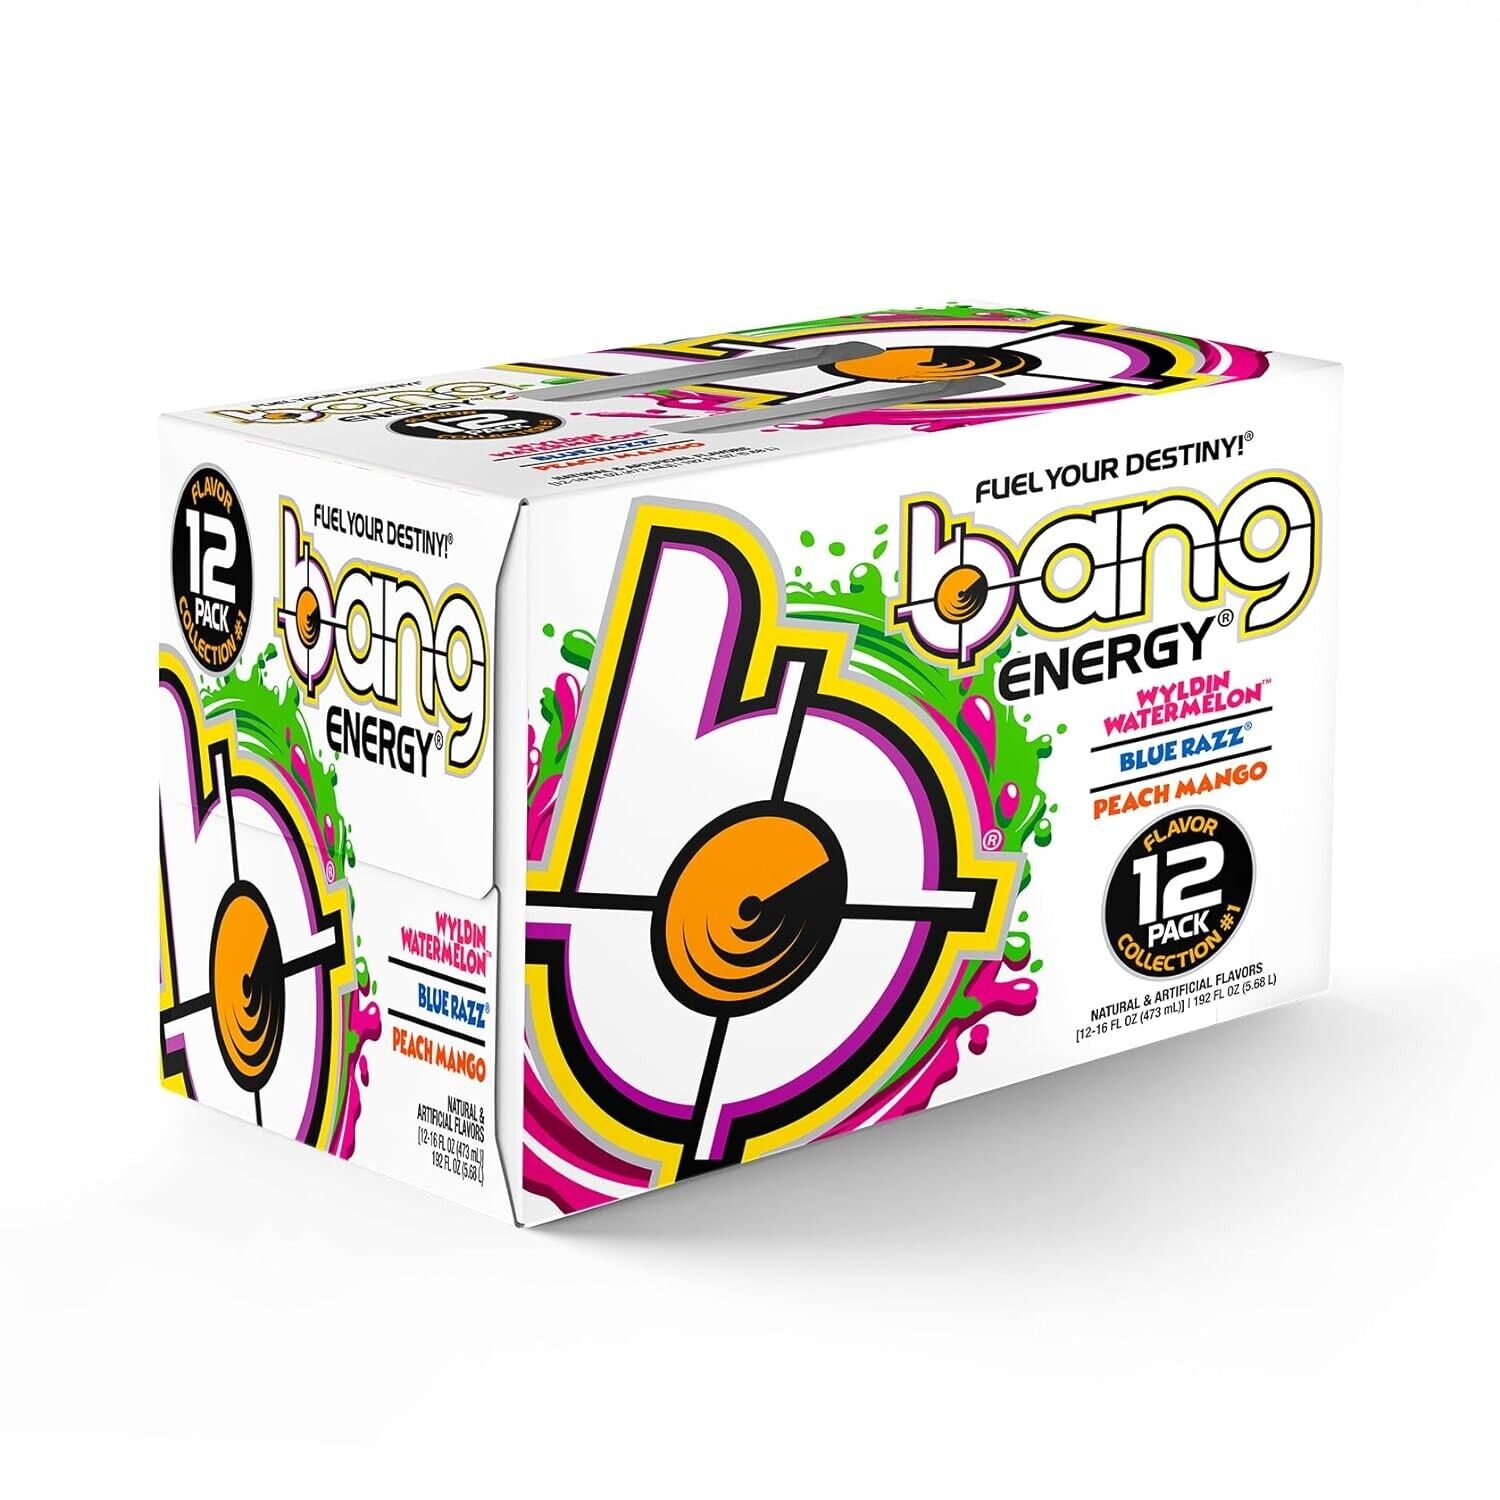 Bang Energy 3Flavor Variety Pack- Peach Mango,Blue Razz,Wyldlin' Watermelon 12pk